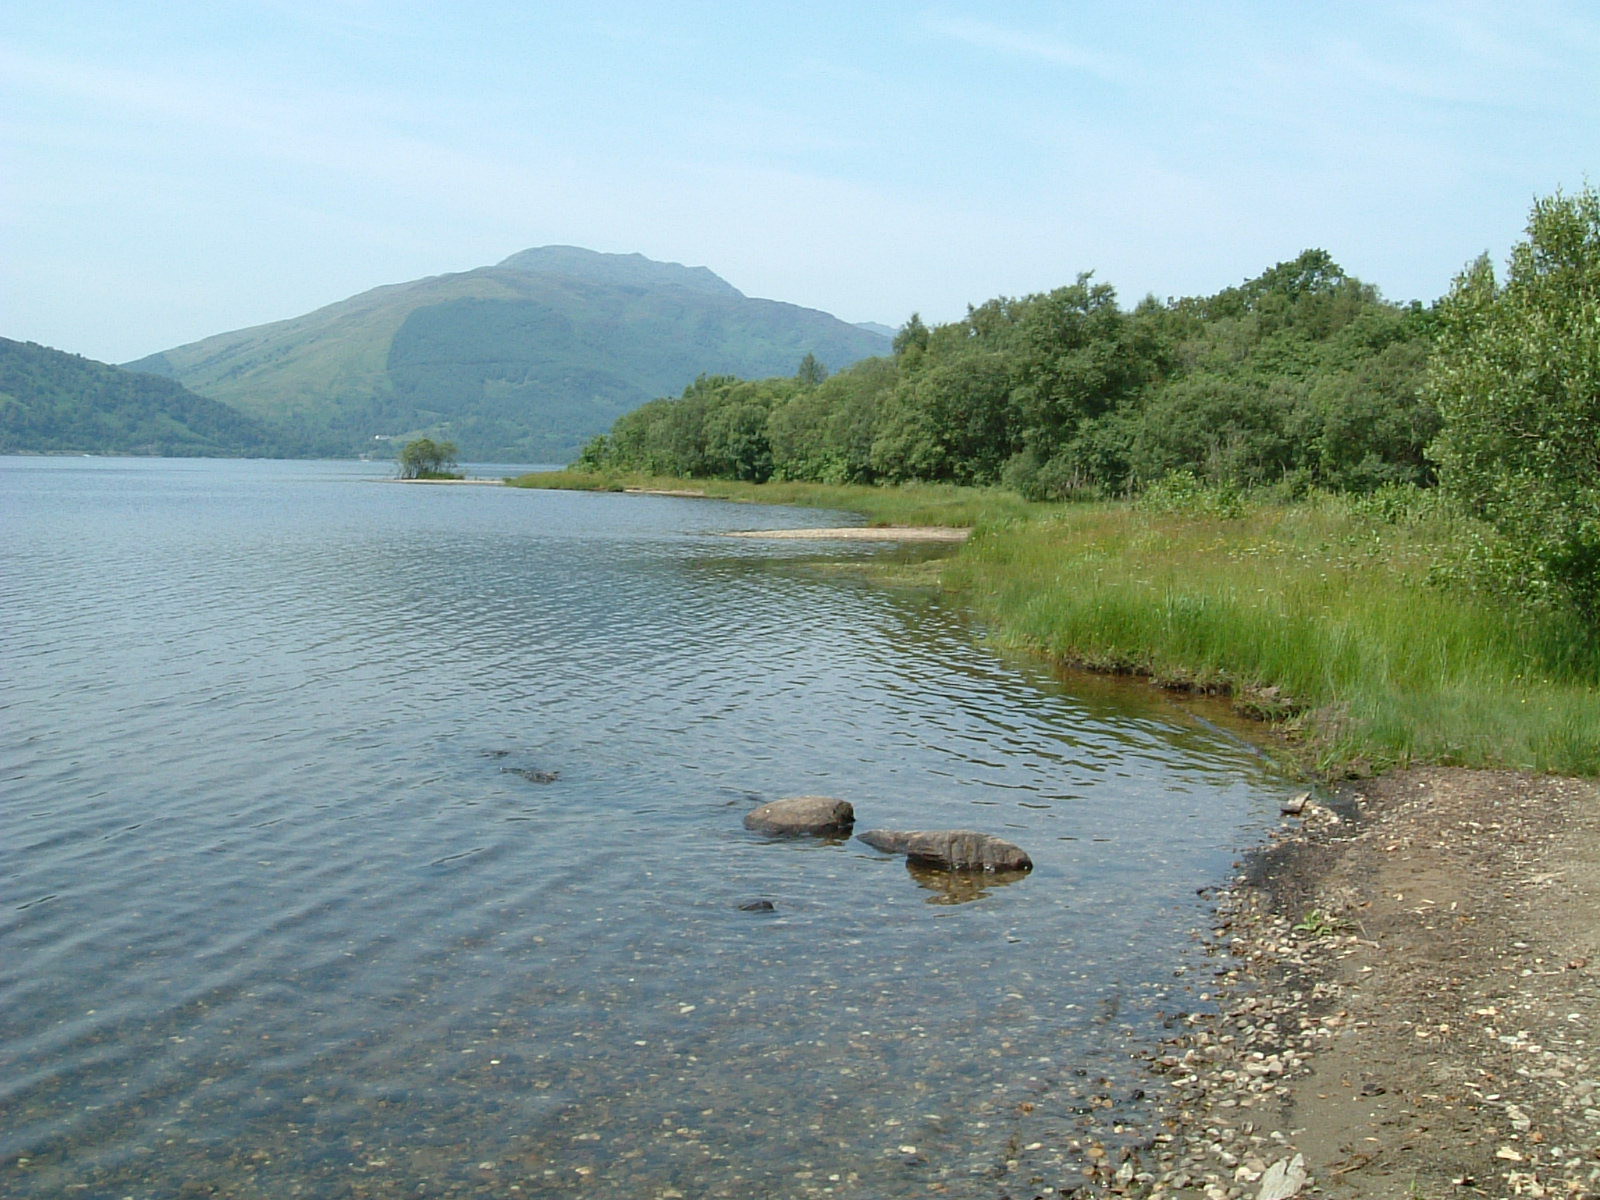 The Loch Lomond shoreline